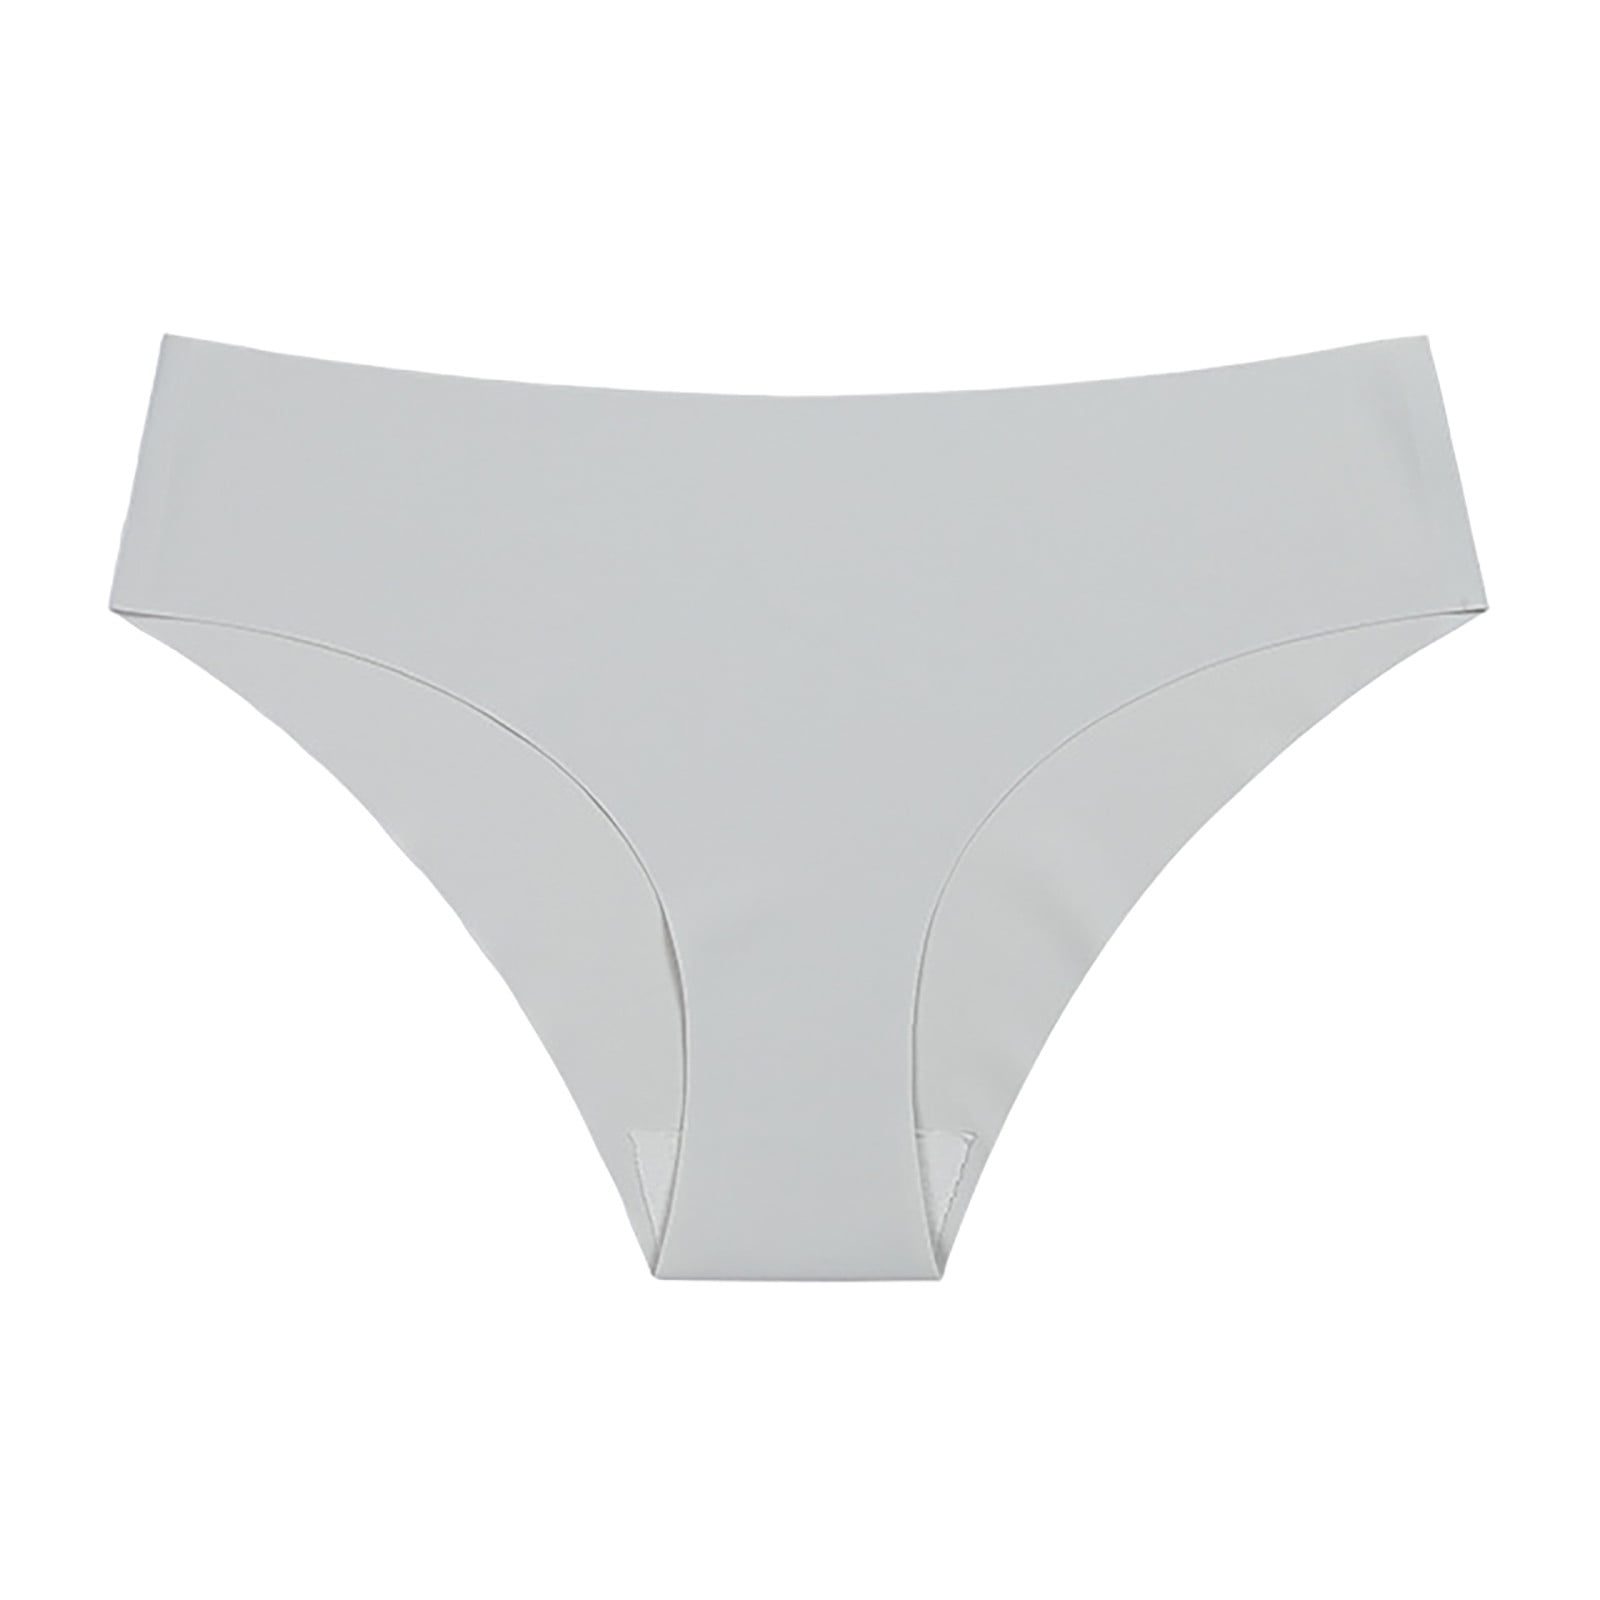 Qcmgmg Panties Seamless Cheeky Low Rise Womens Bikini Underwear Light Gray  M 